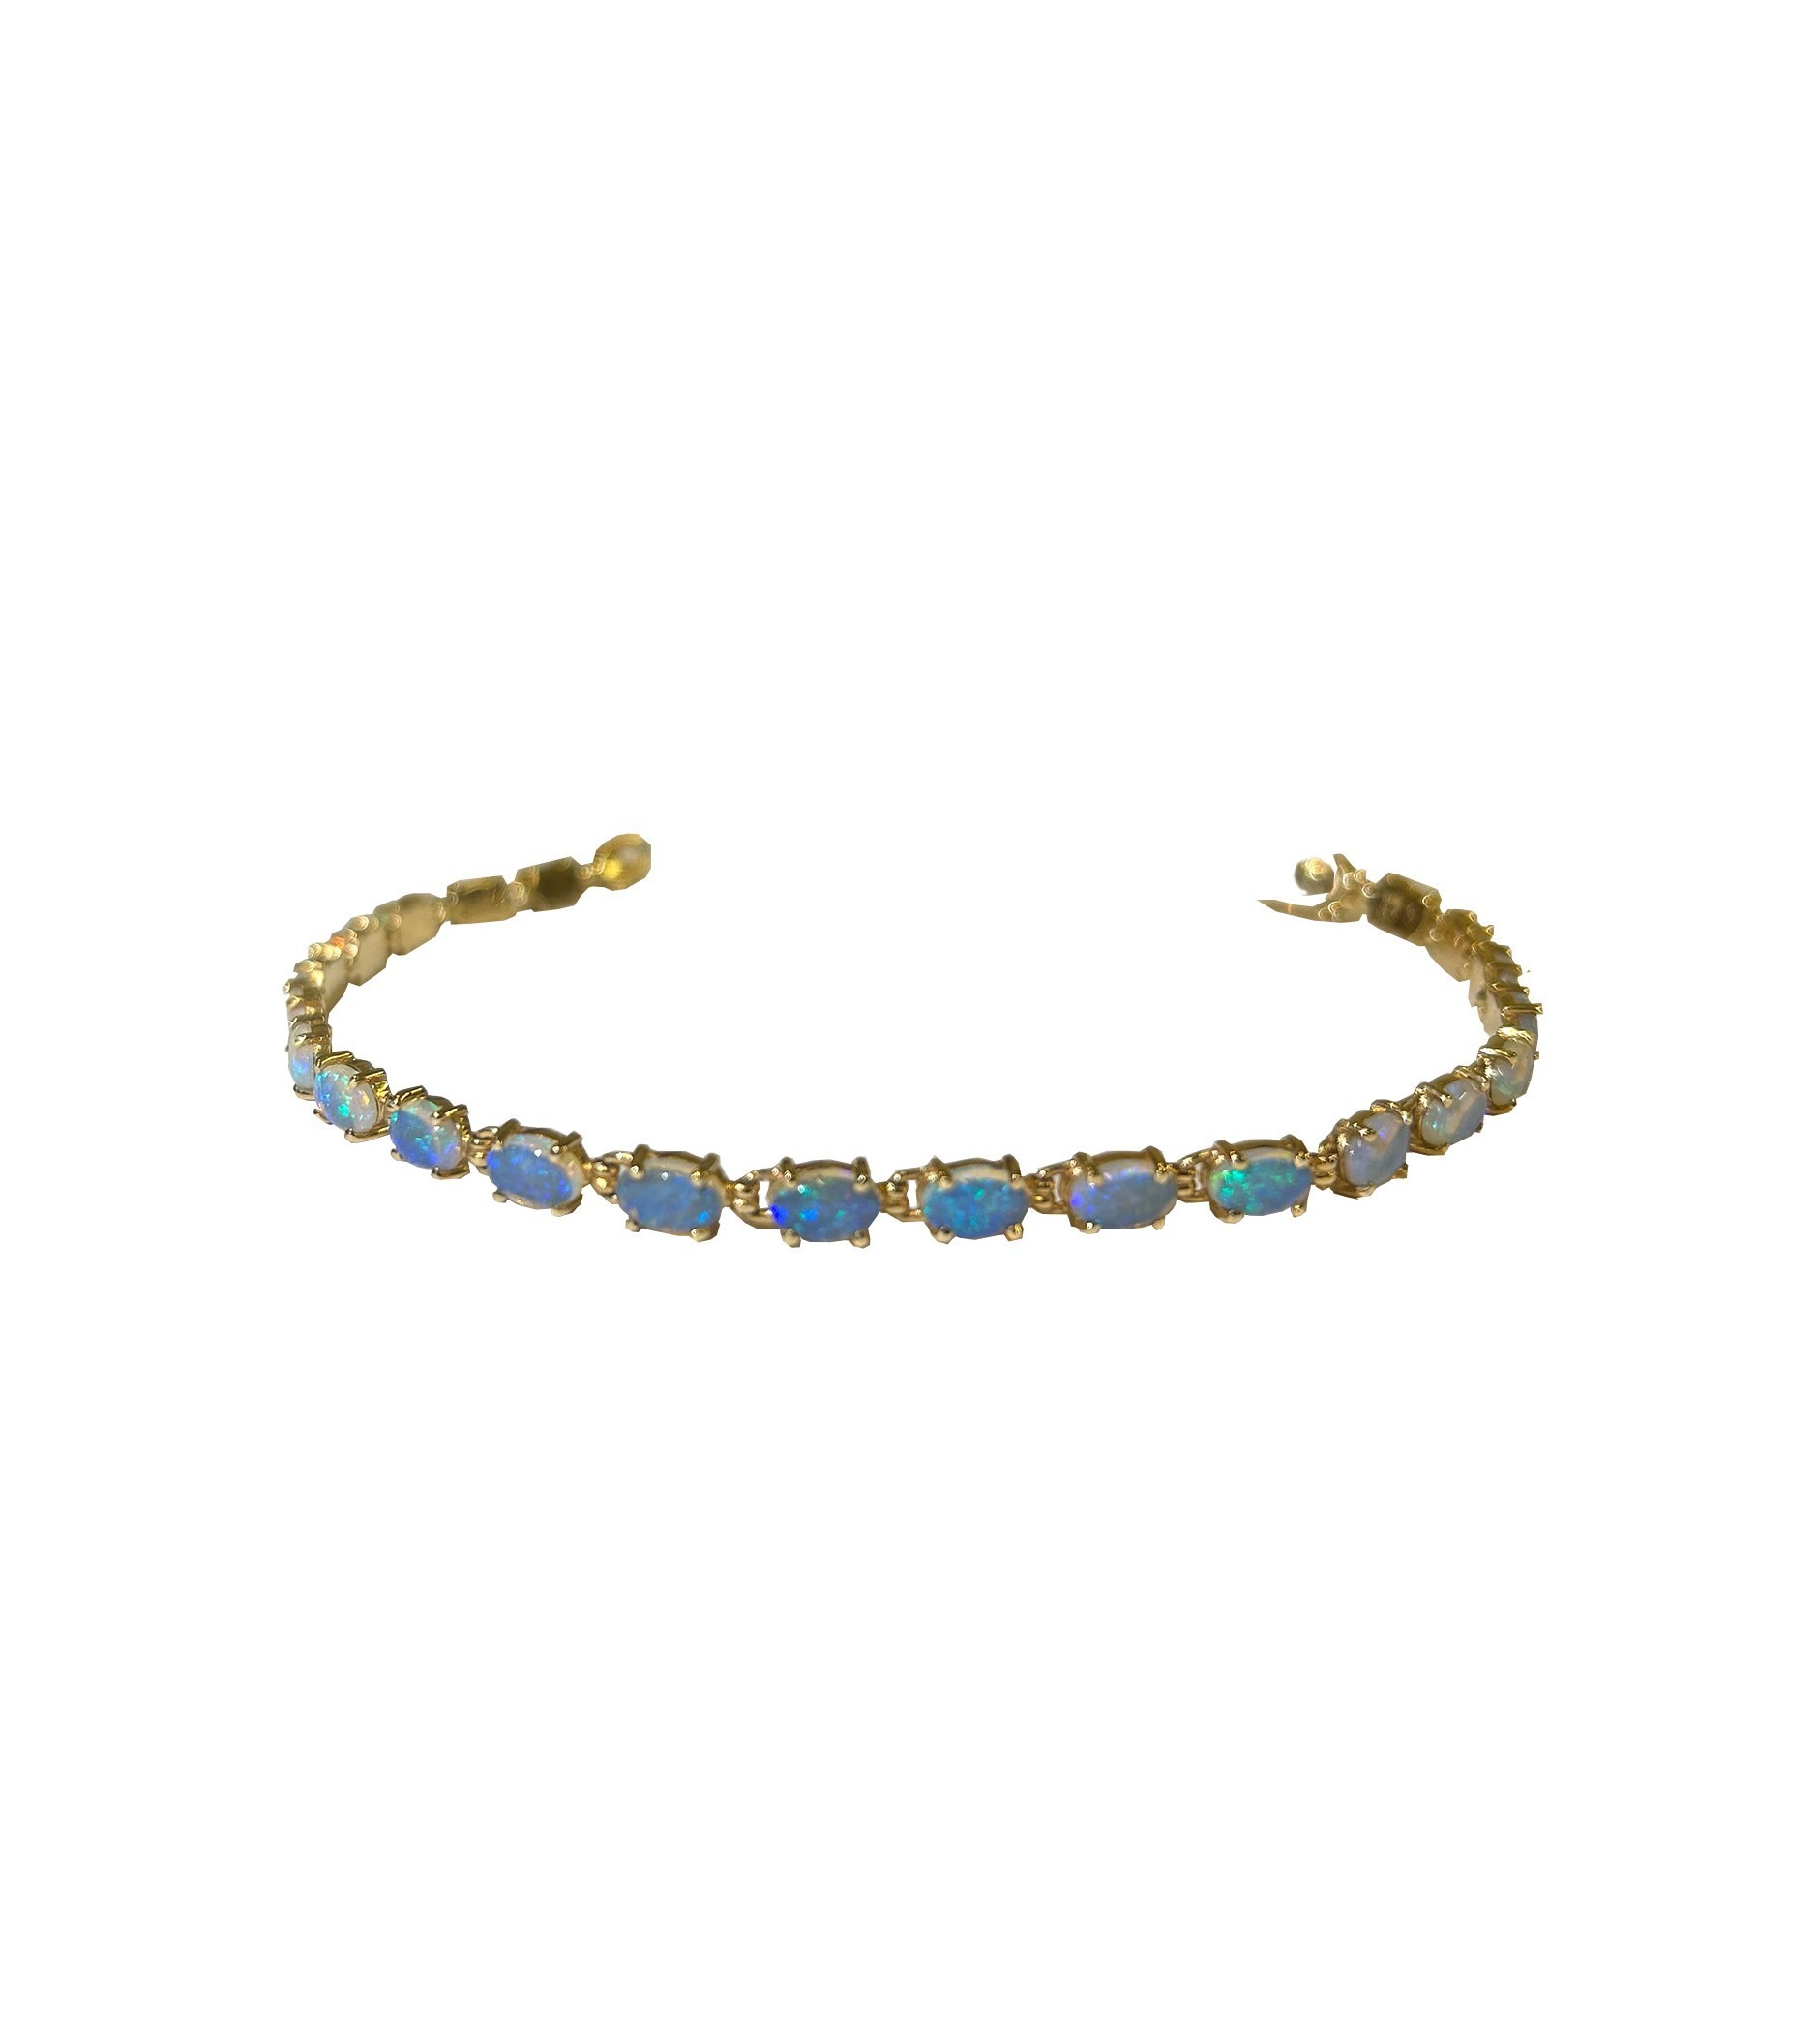 A 14 carat yellow gold and black opal line bracelet